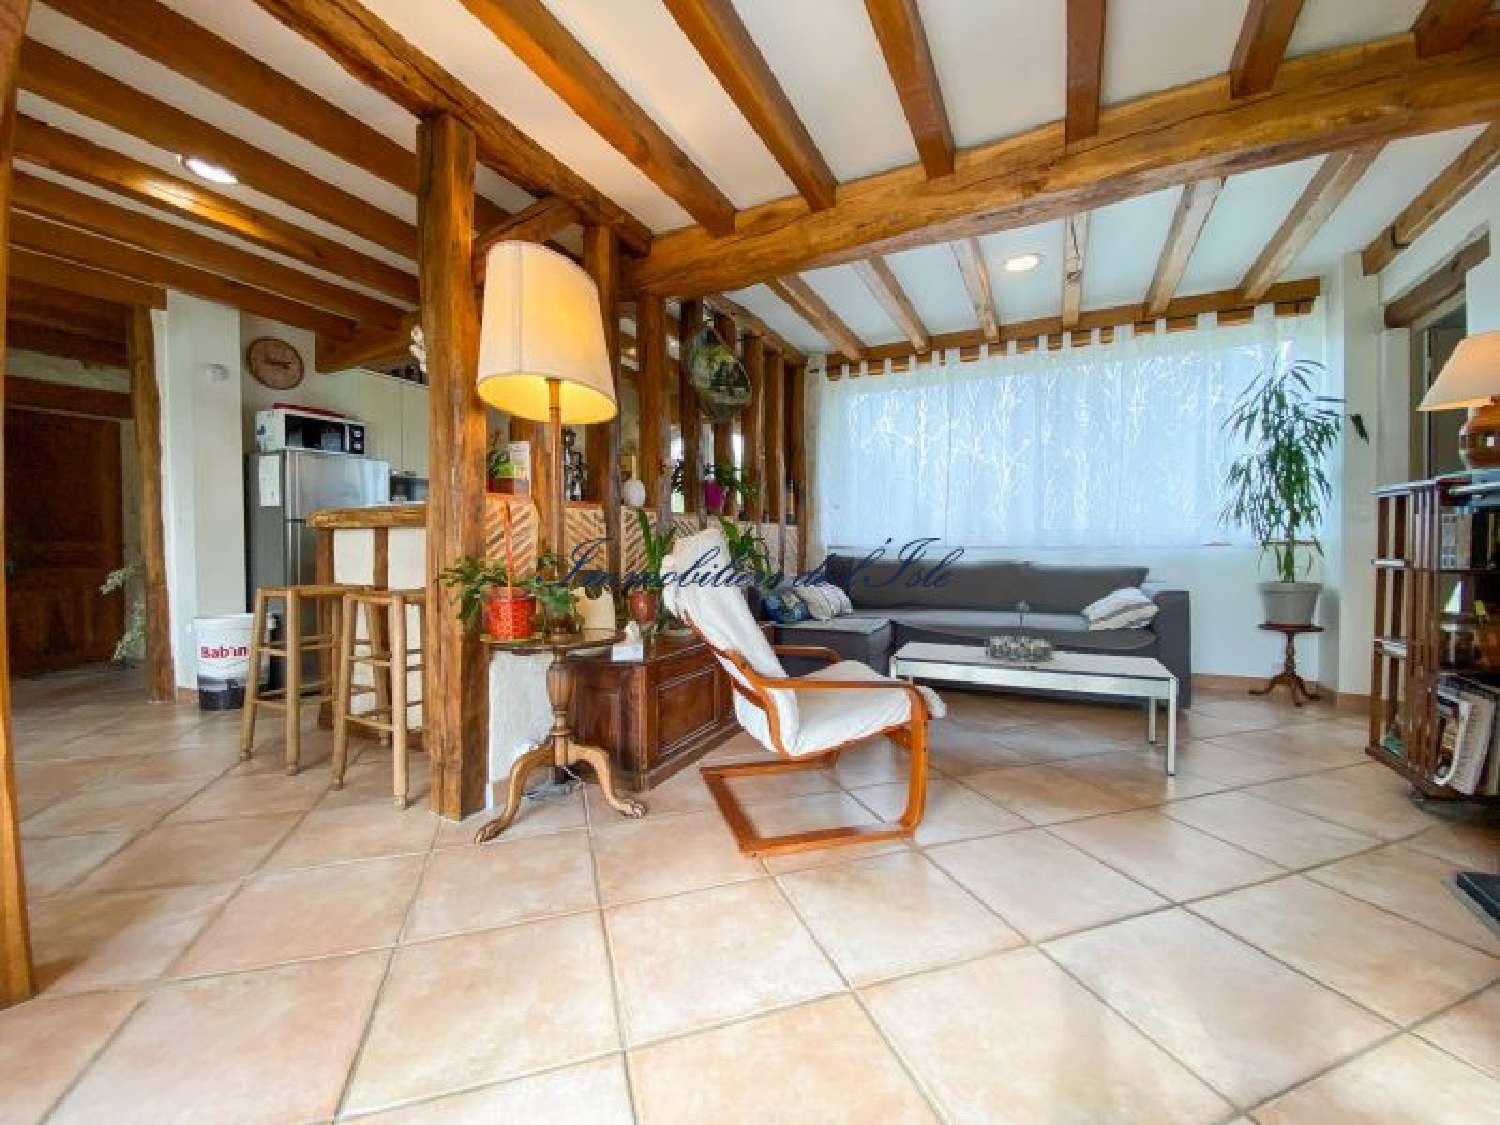  à vendre maison Servanches Dordogne 5